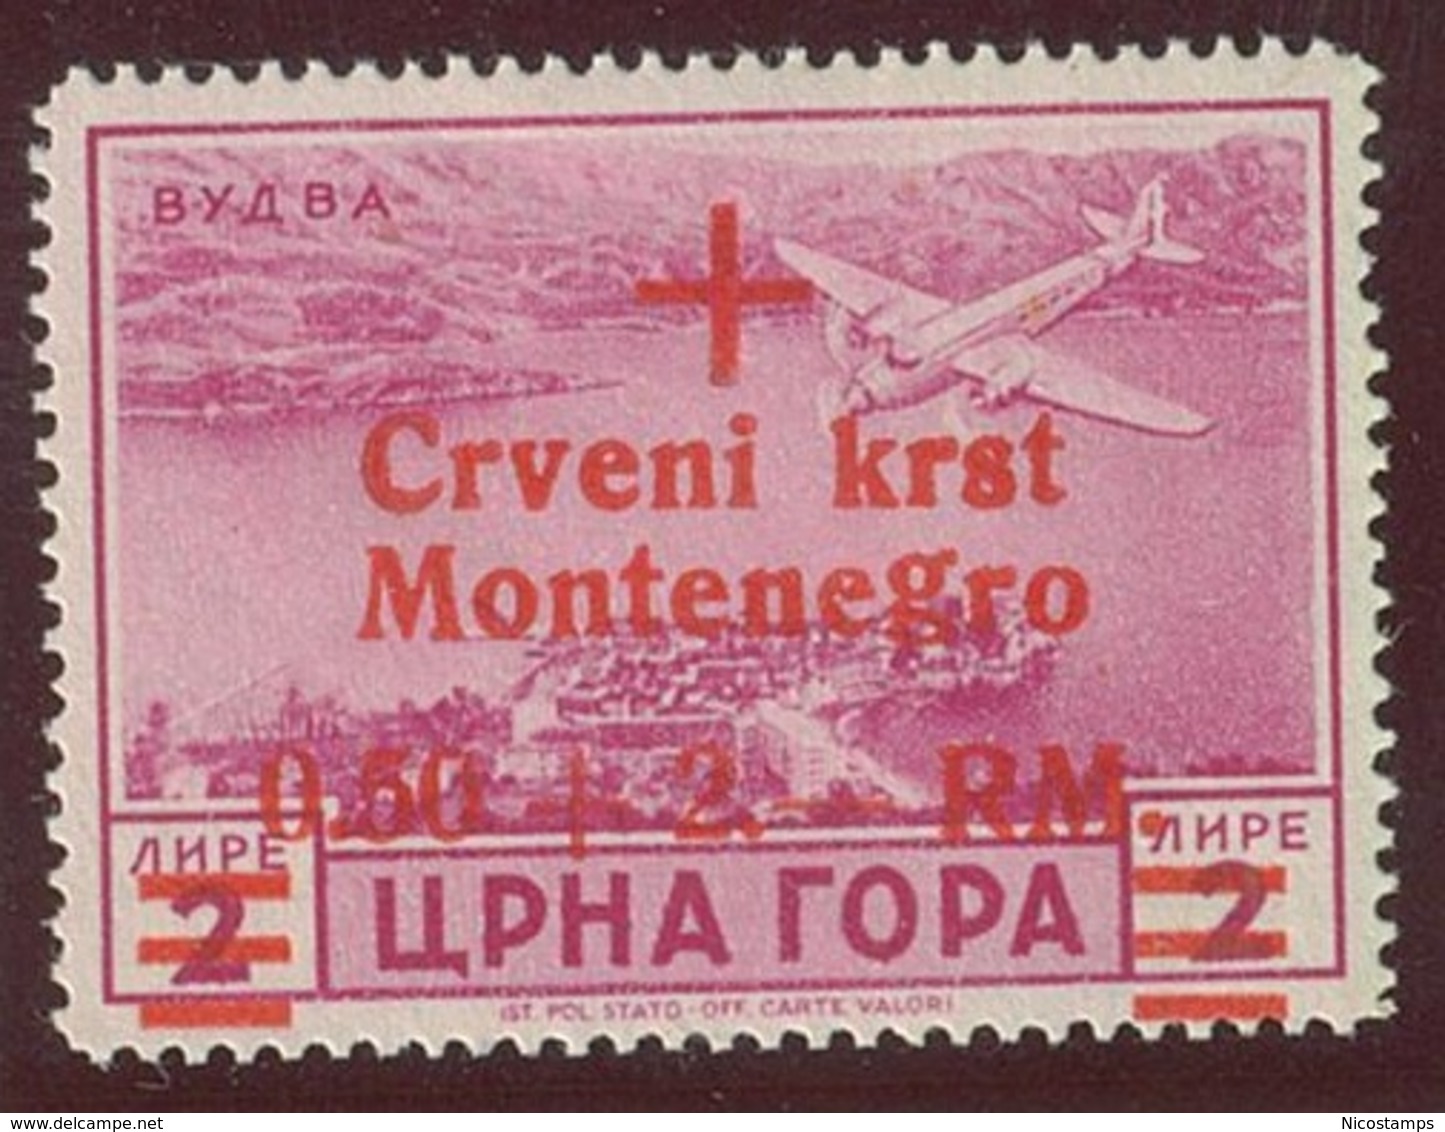 ITALIA - OCC. TEDESCA MONTENEGRO POSTA AEREA SASS. 11c NUOVO - Deutsche Bes.: Montenegro